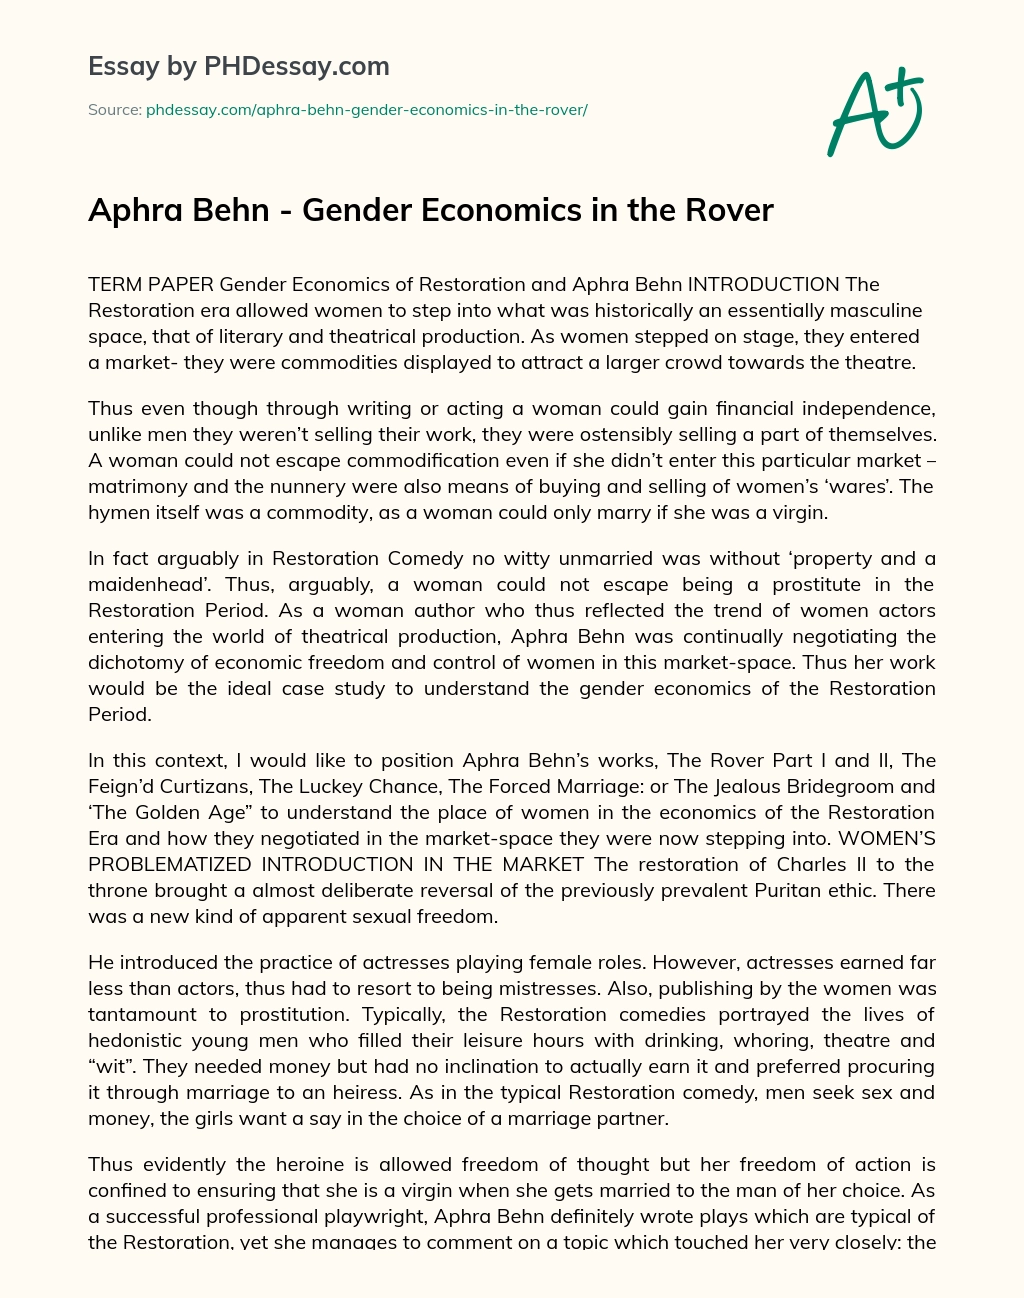 Aphra Behn – Gender Economics in the Rover essay